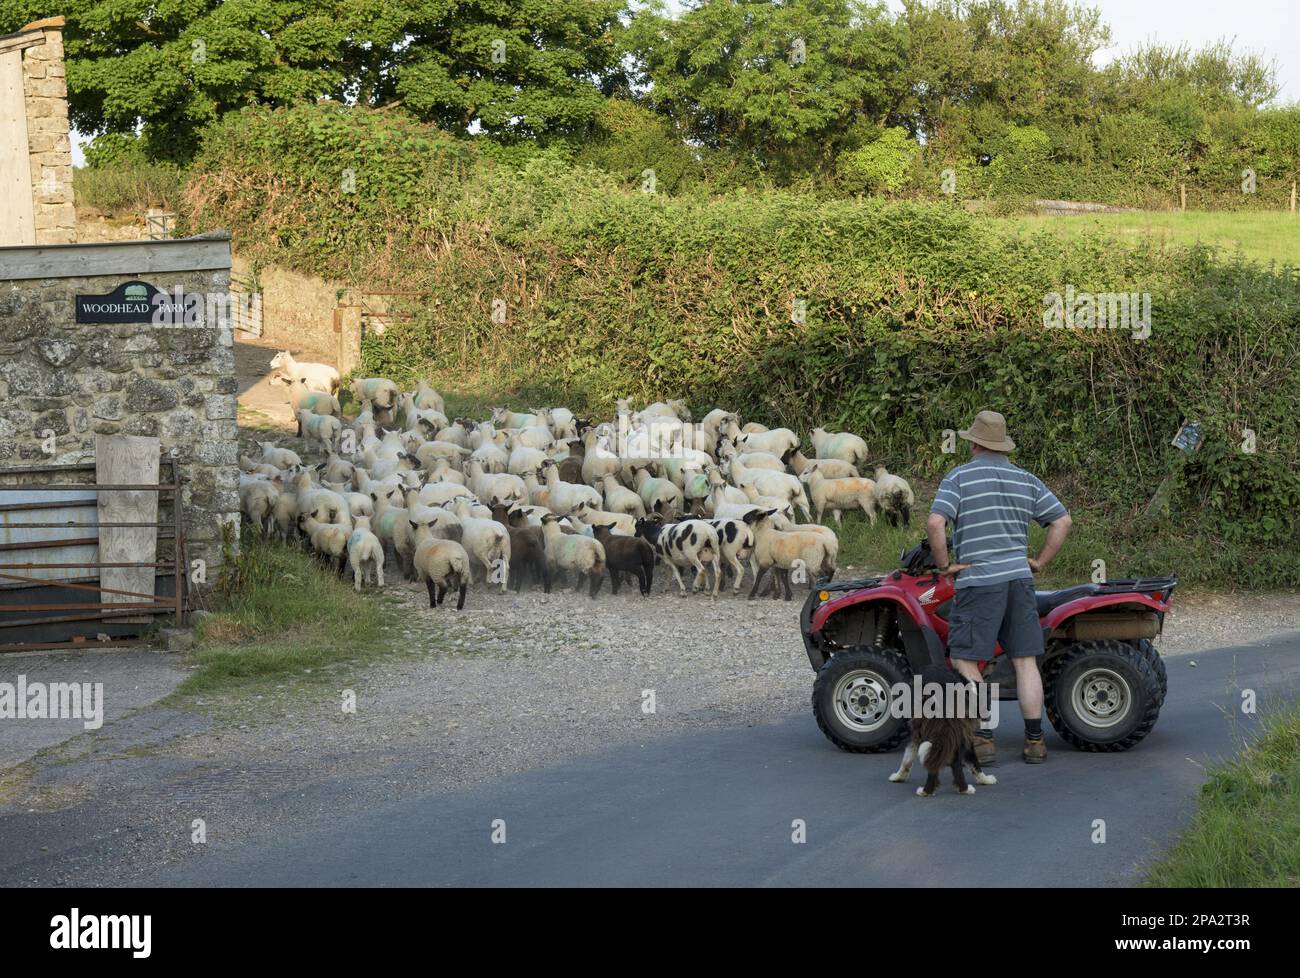 Sheep farming, shepherd with quadbike and sheepdog, moving flock along road, Branscombe, Seaton, Devon, England, United Kingdom Stock Photo